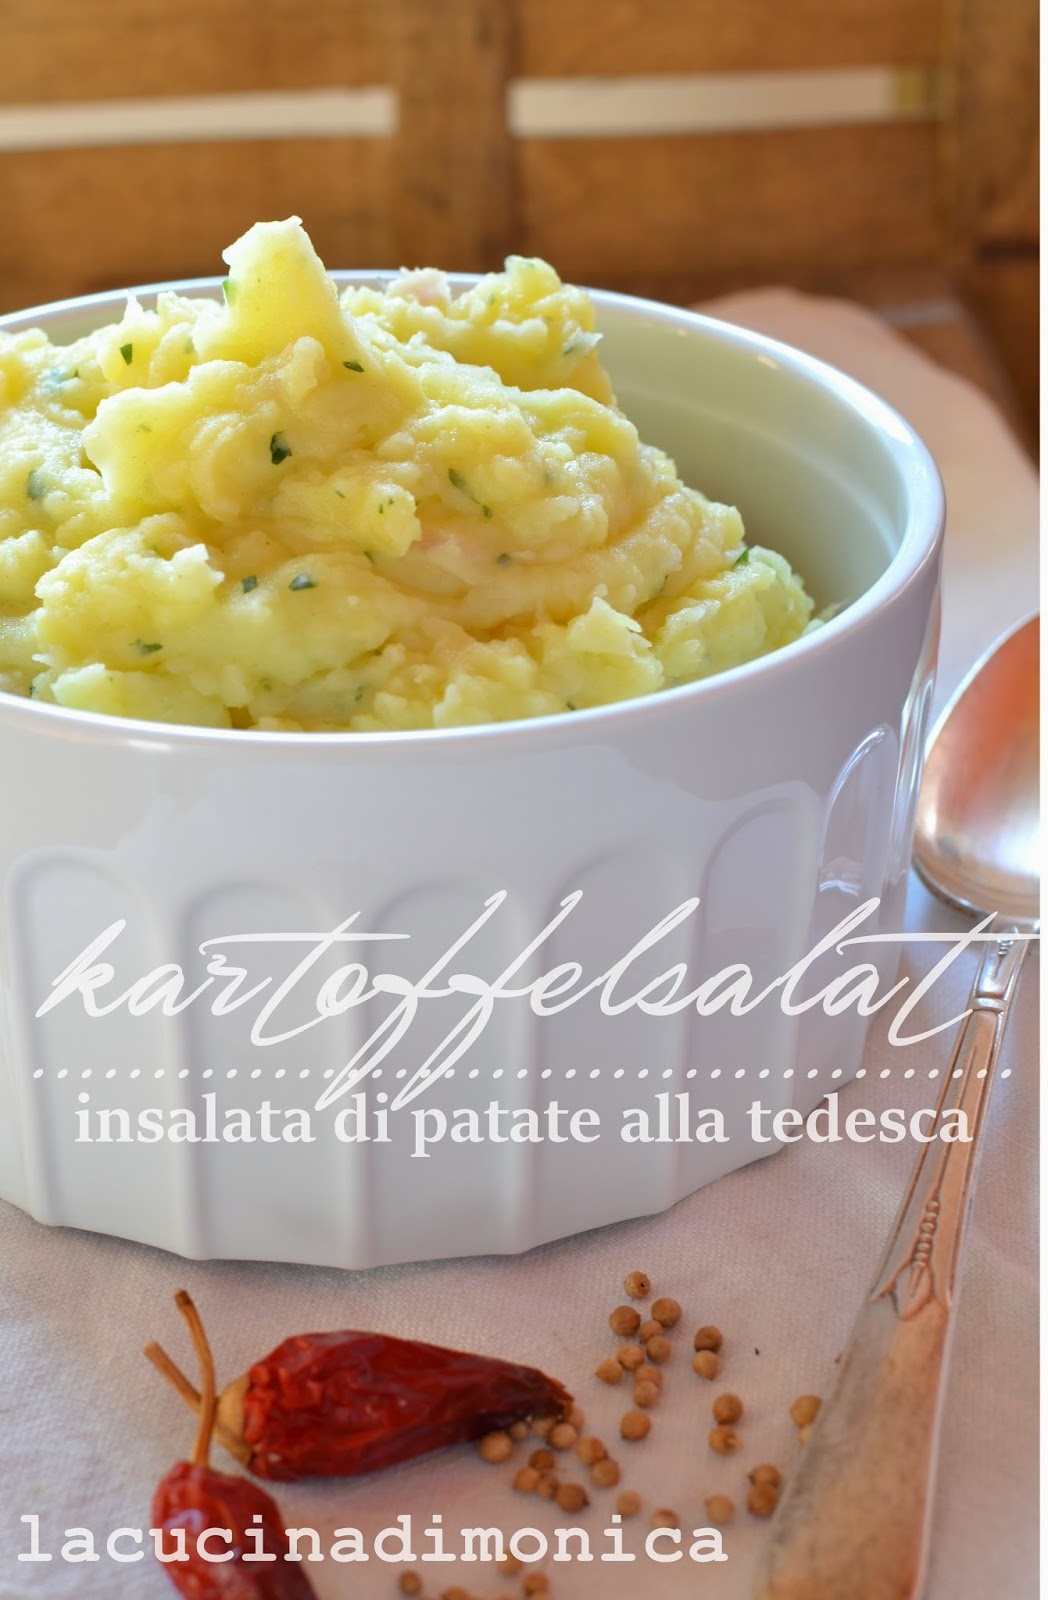 kartoffelsalat - insalata di patate alla tedesca